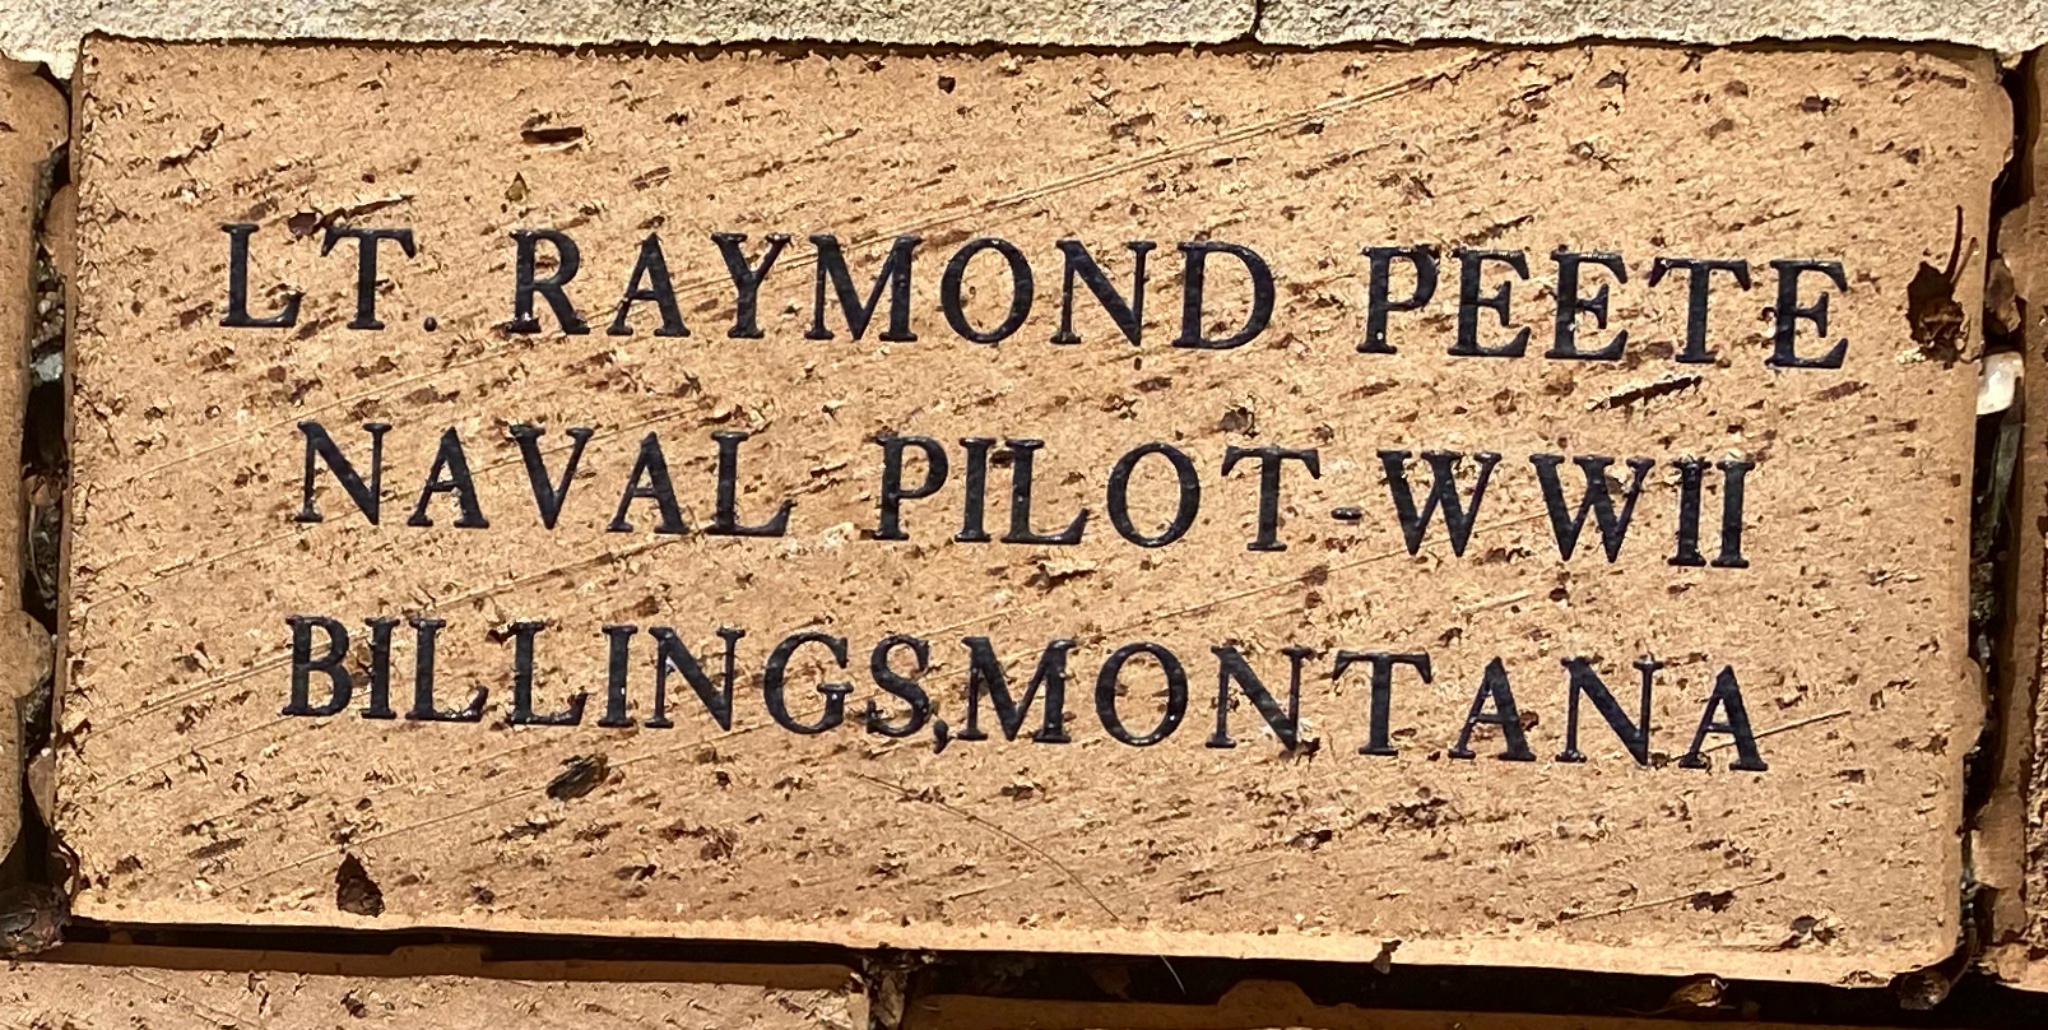 LT. RAYMOND PEETE NAVAL PILOT  WWII BILLINGS,MONTANA